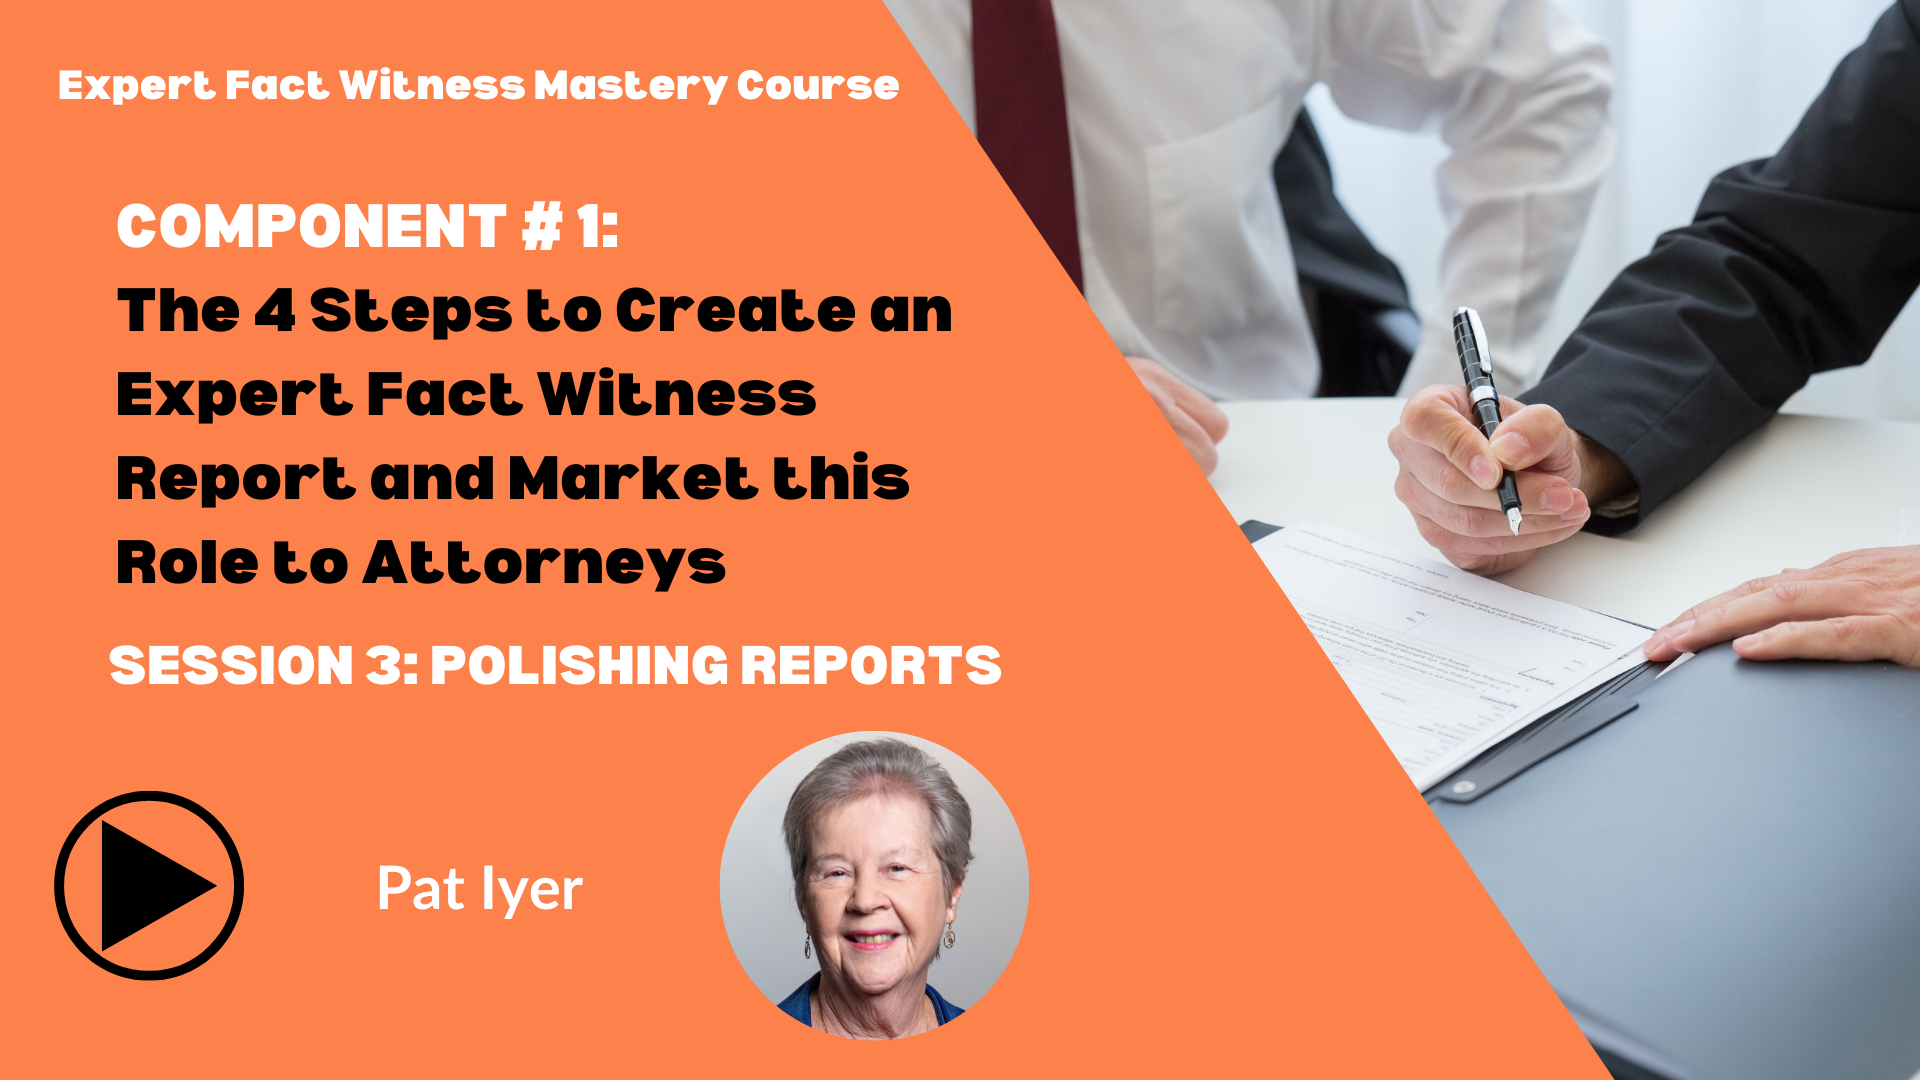 Pat Iyer - C1 Expert Fact Witness Mastery - Polishing Reports